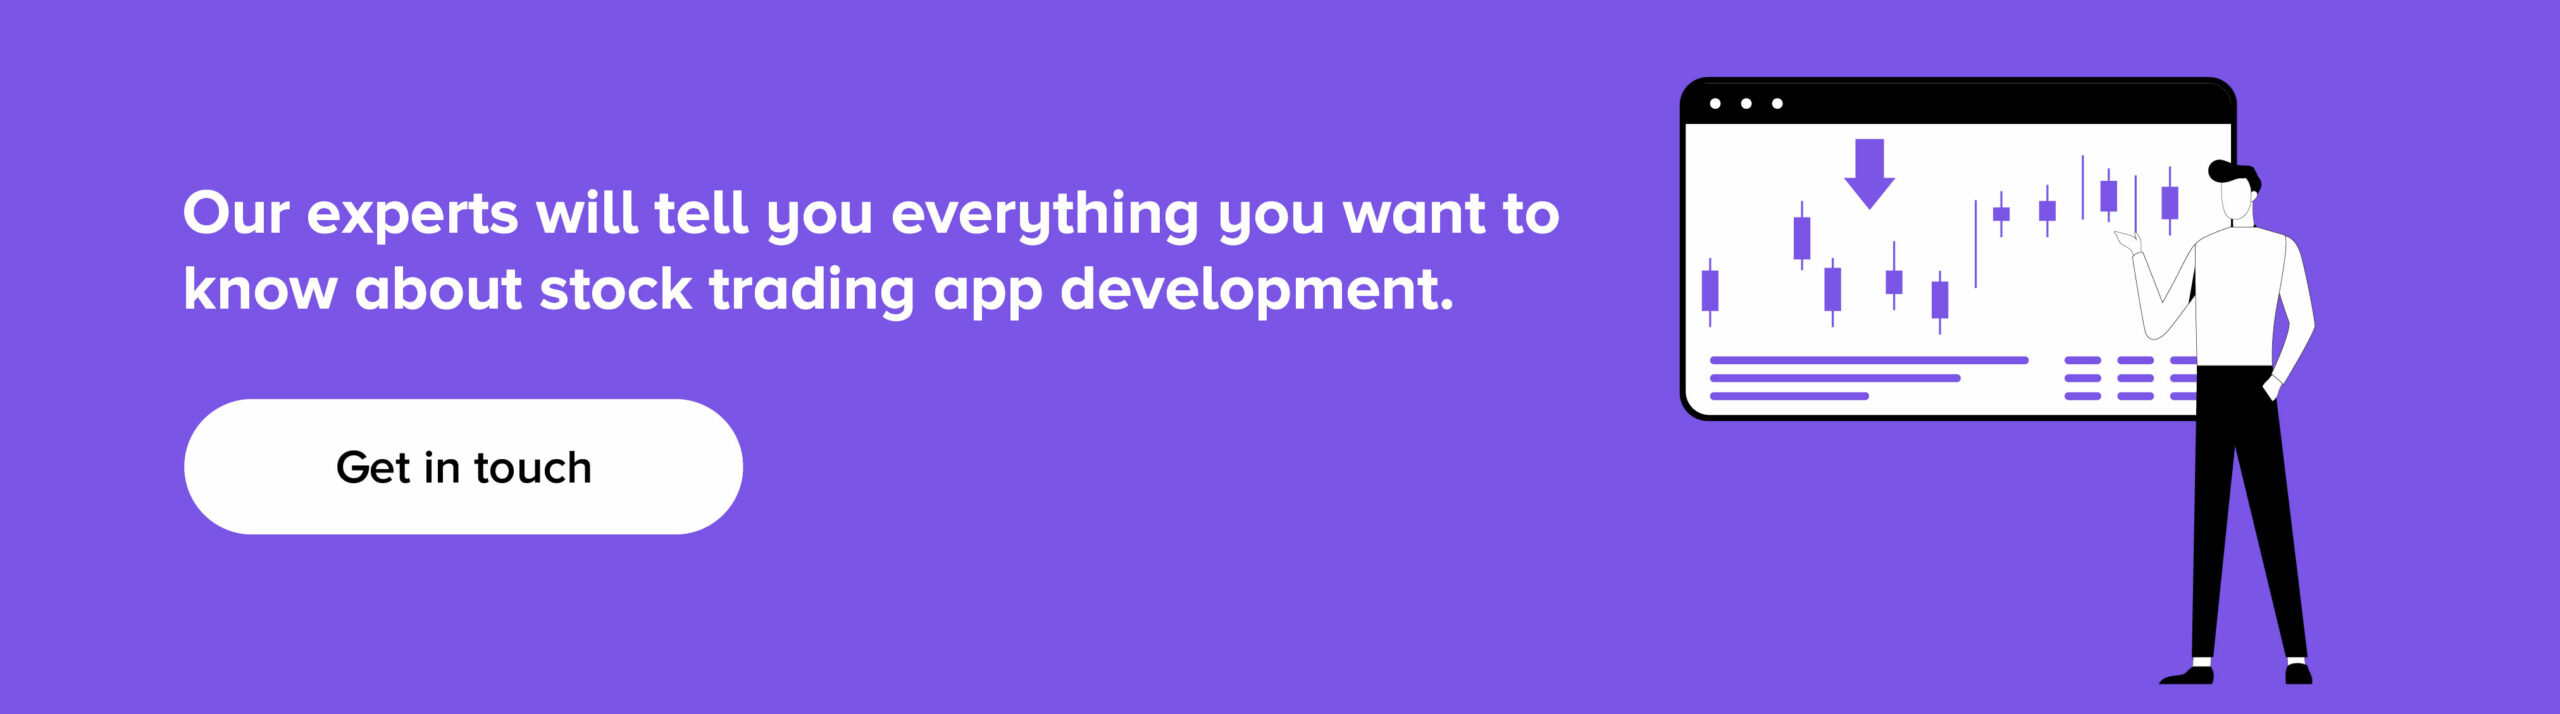 stock app development - cta